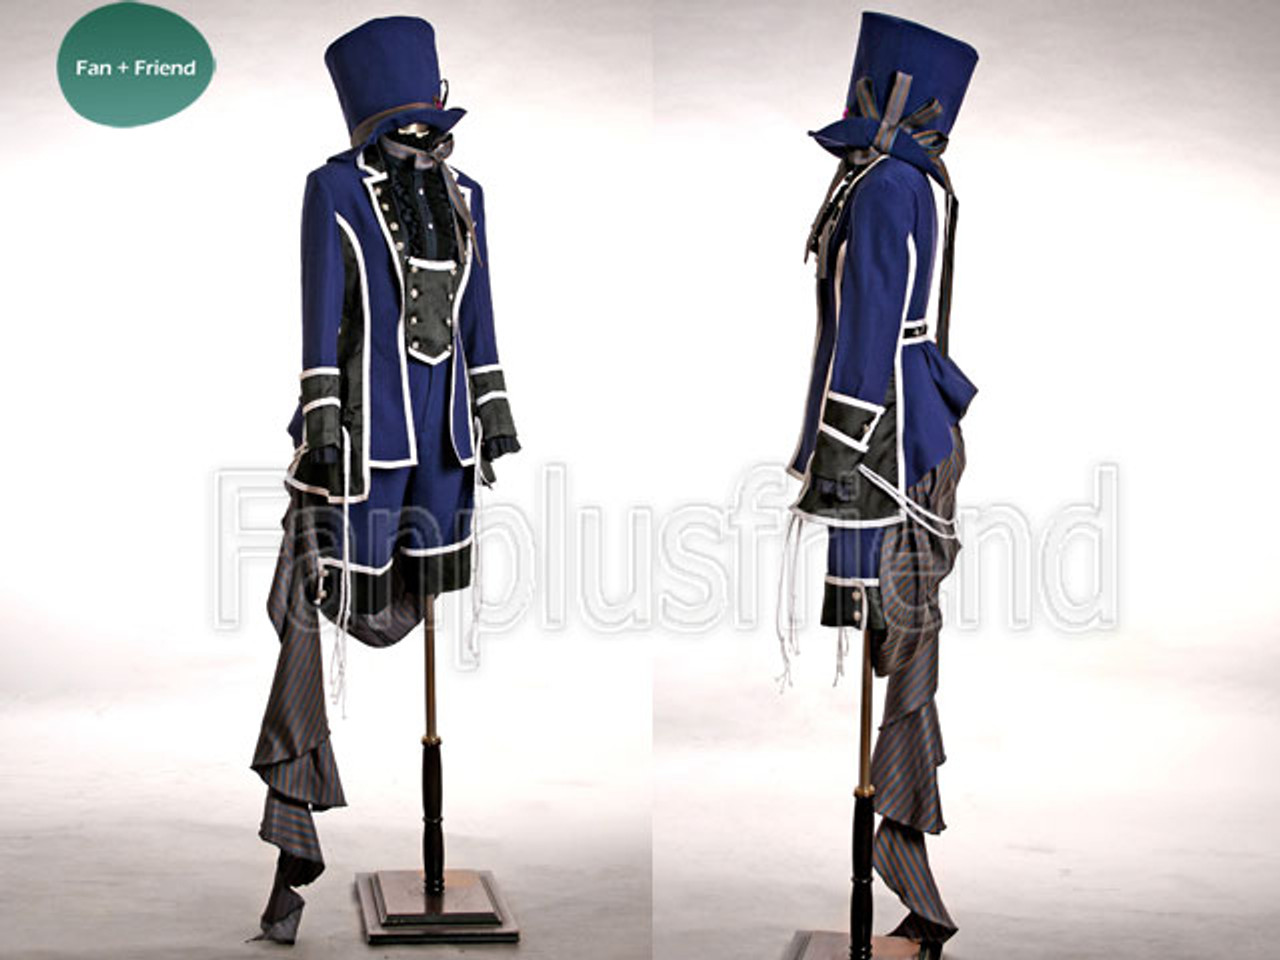 Black Butler Kuroshitsuji Cosplay, Ciel Phantomhive Gothic Dandy Outfit